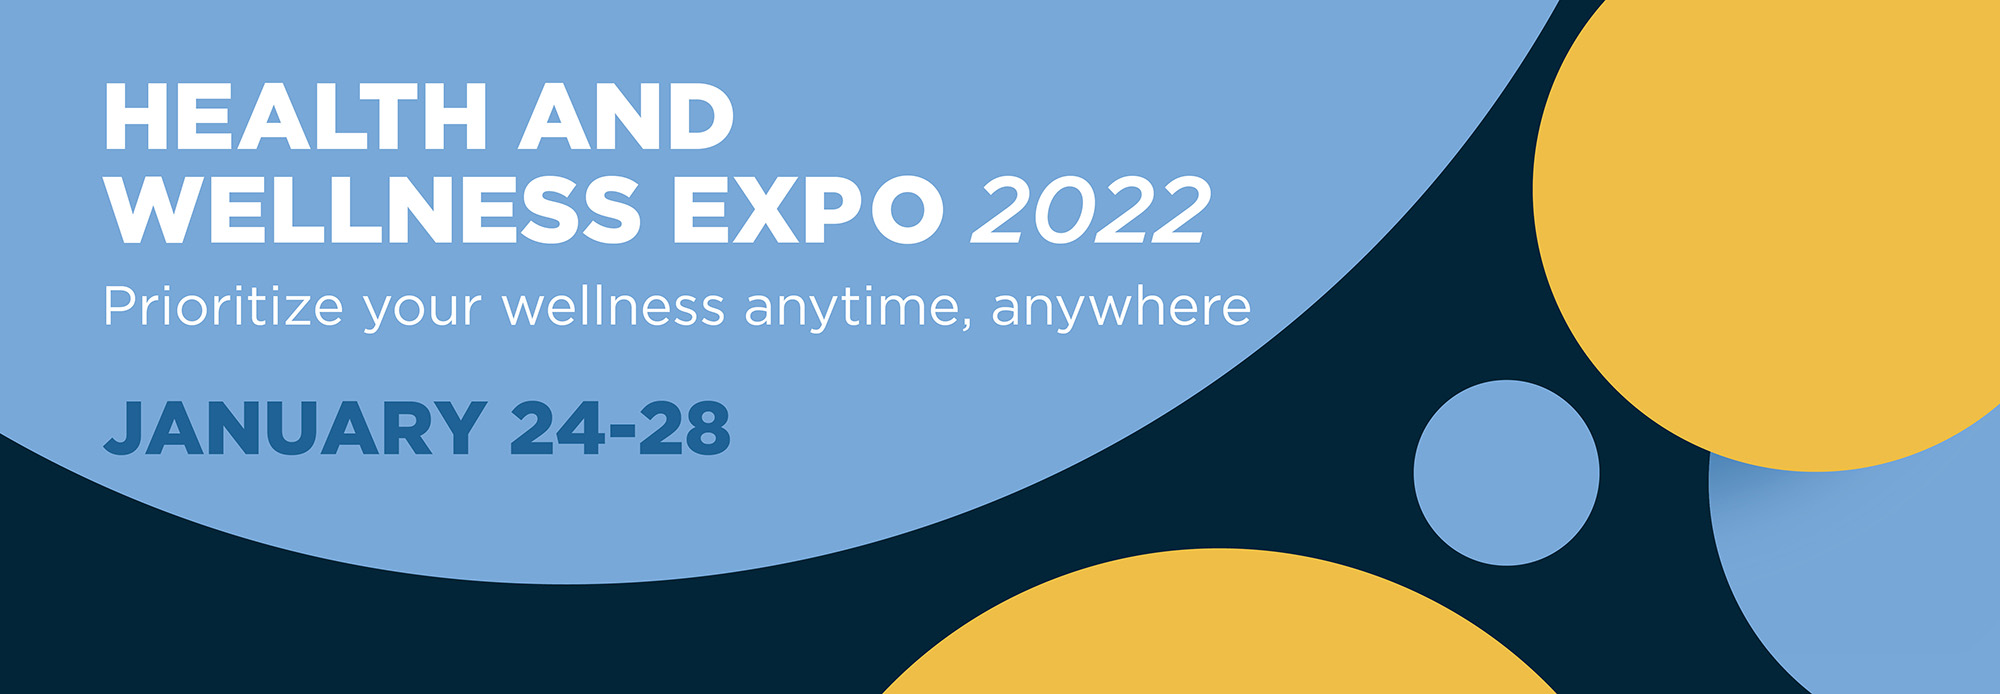 Health and Wellness Expo 2022